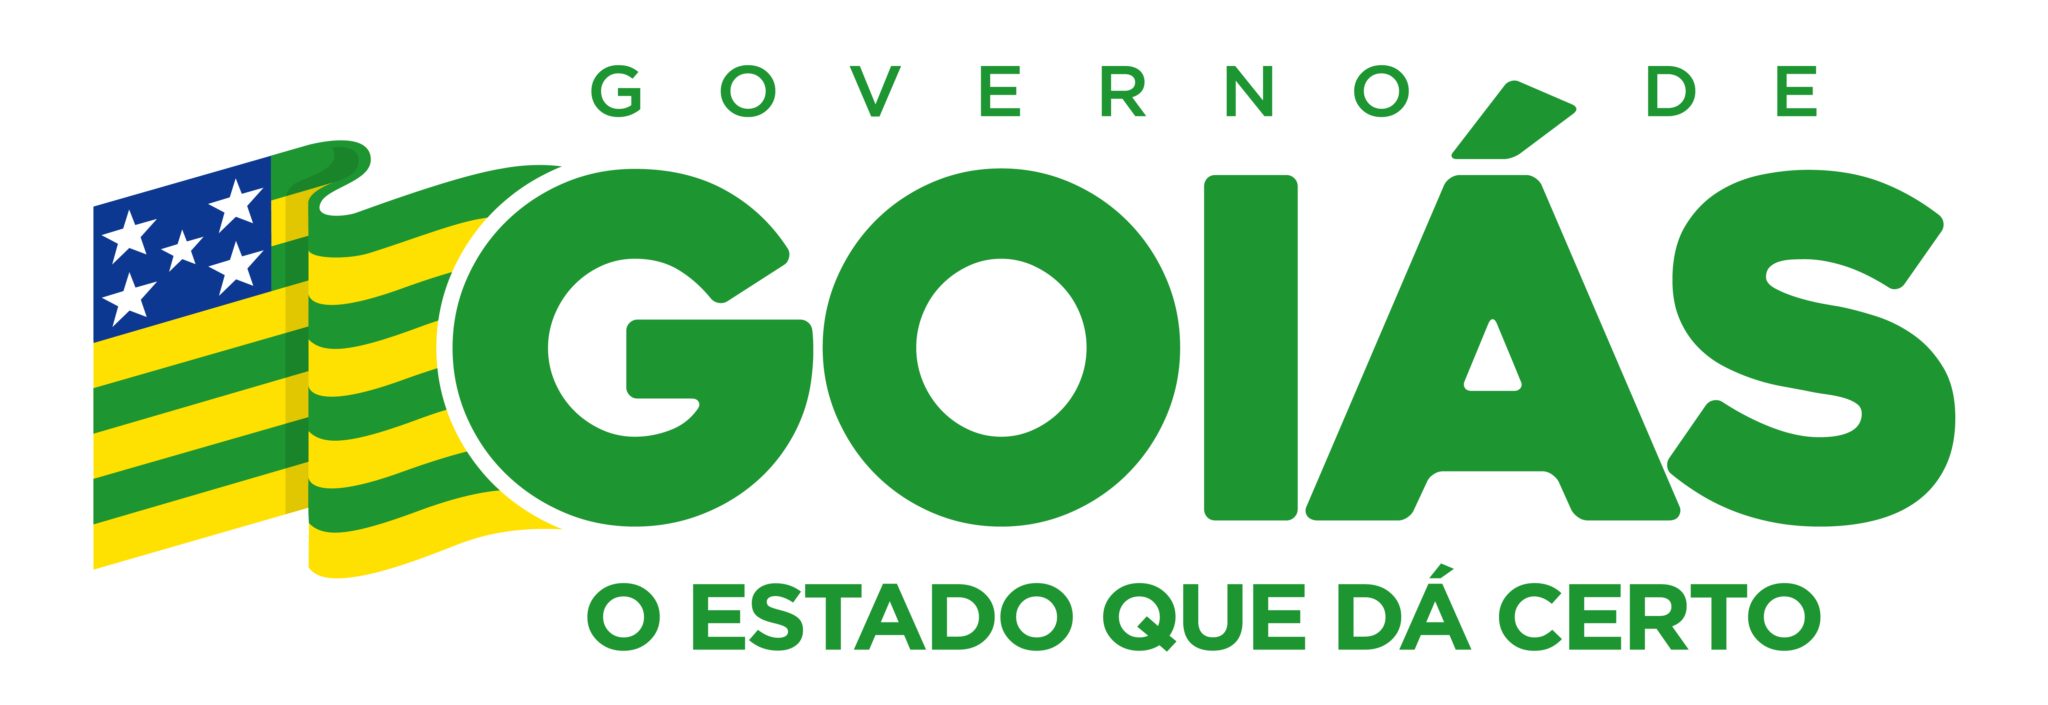 Empréstimo Consignado ao Servidor Público Estadual do Goiás - GO.